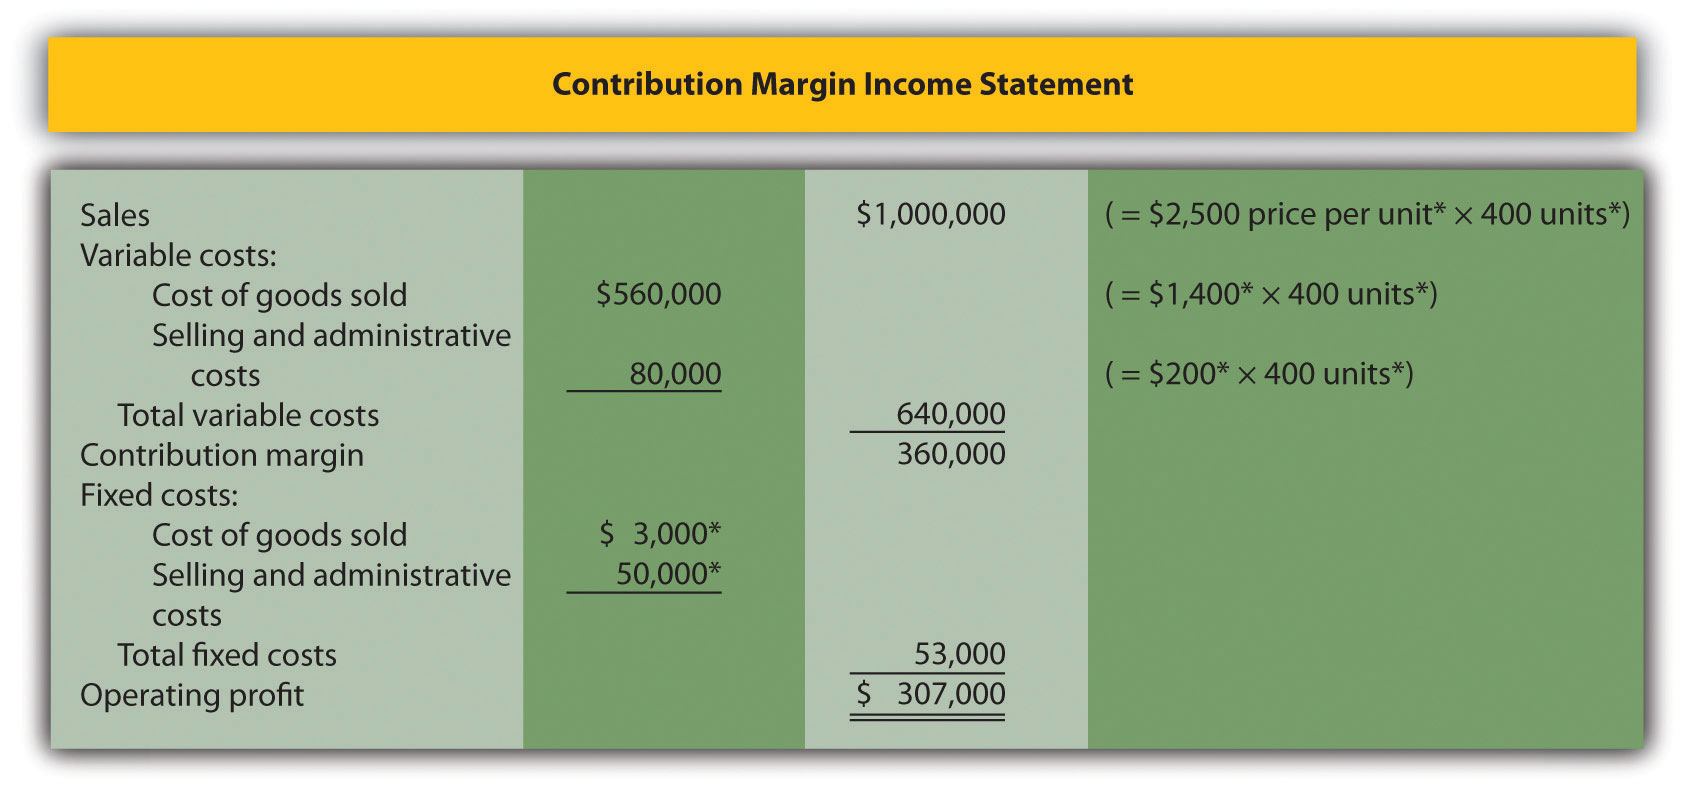 The Contribution Margin Income Statement